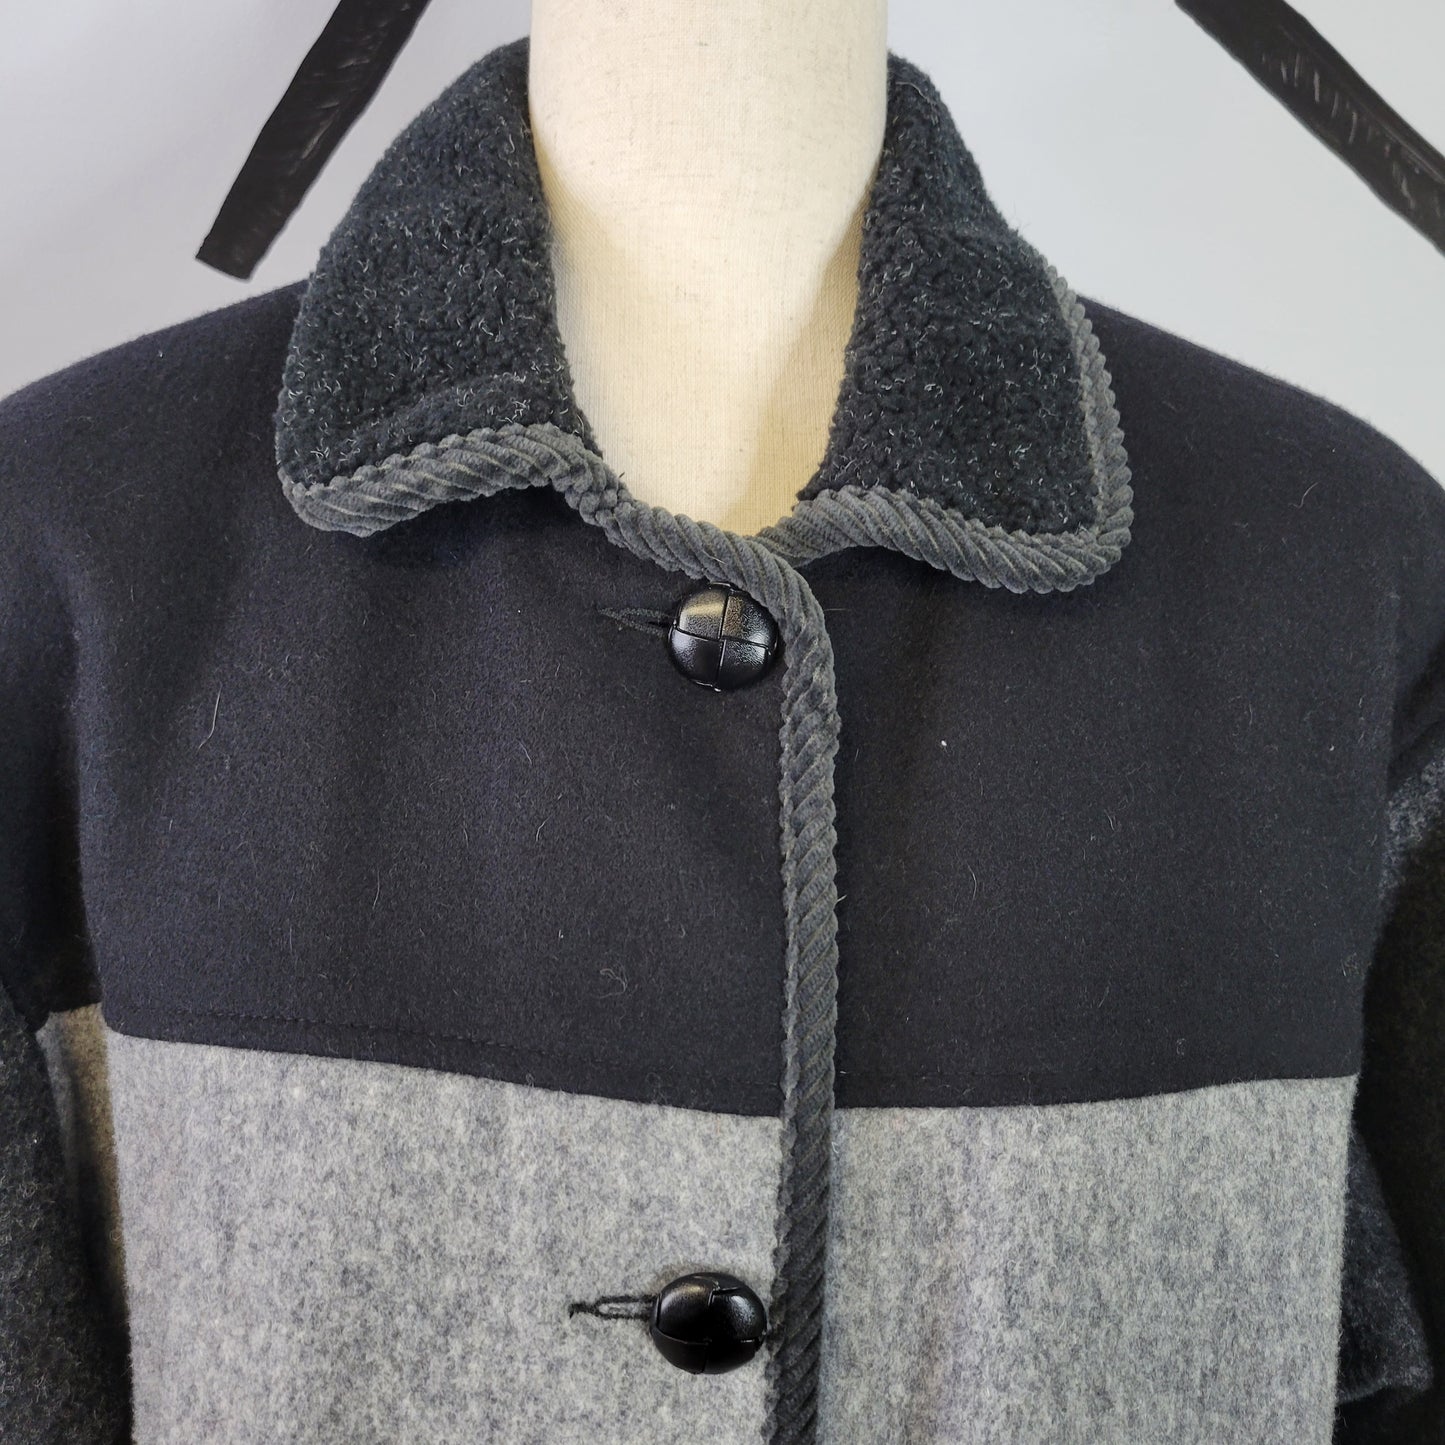 Herman Kay Vintage Heavy Wool Blend Striped Grayscale Coat - Size 12